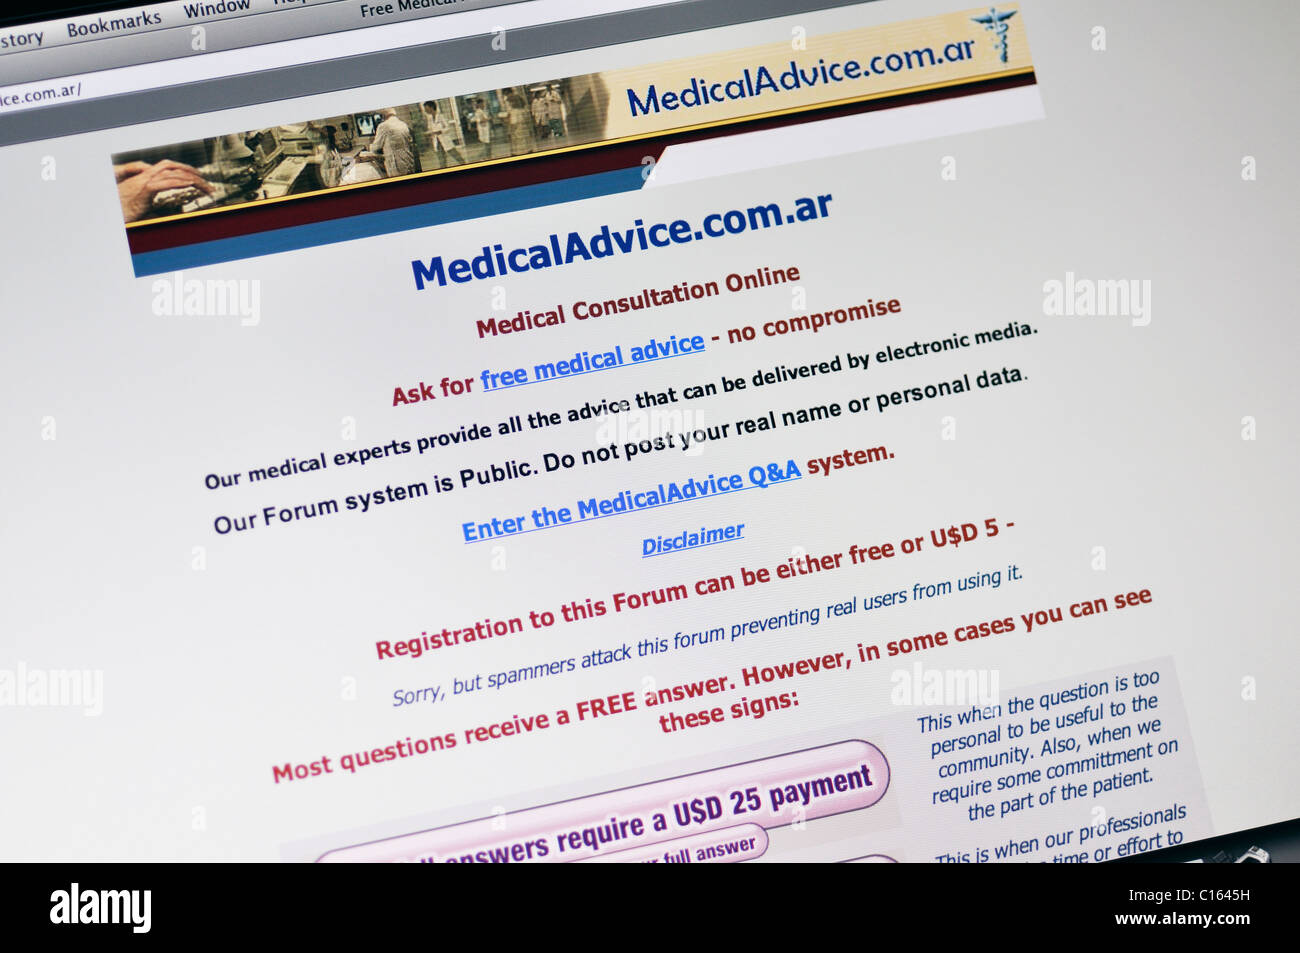 Medicaladvice.com website - health and medical advice Stock Photo